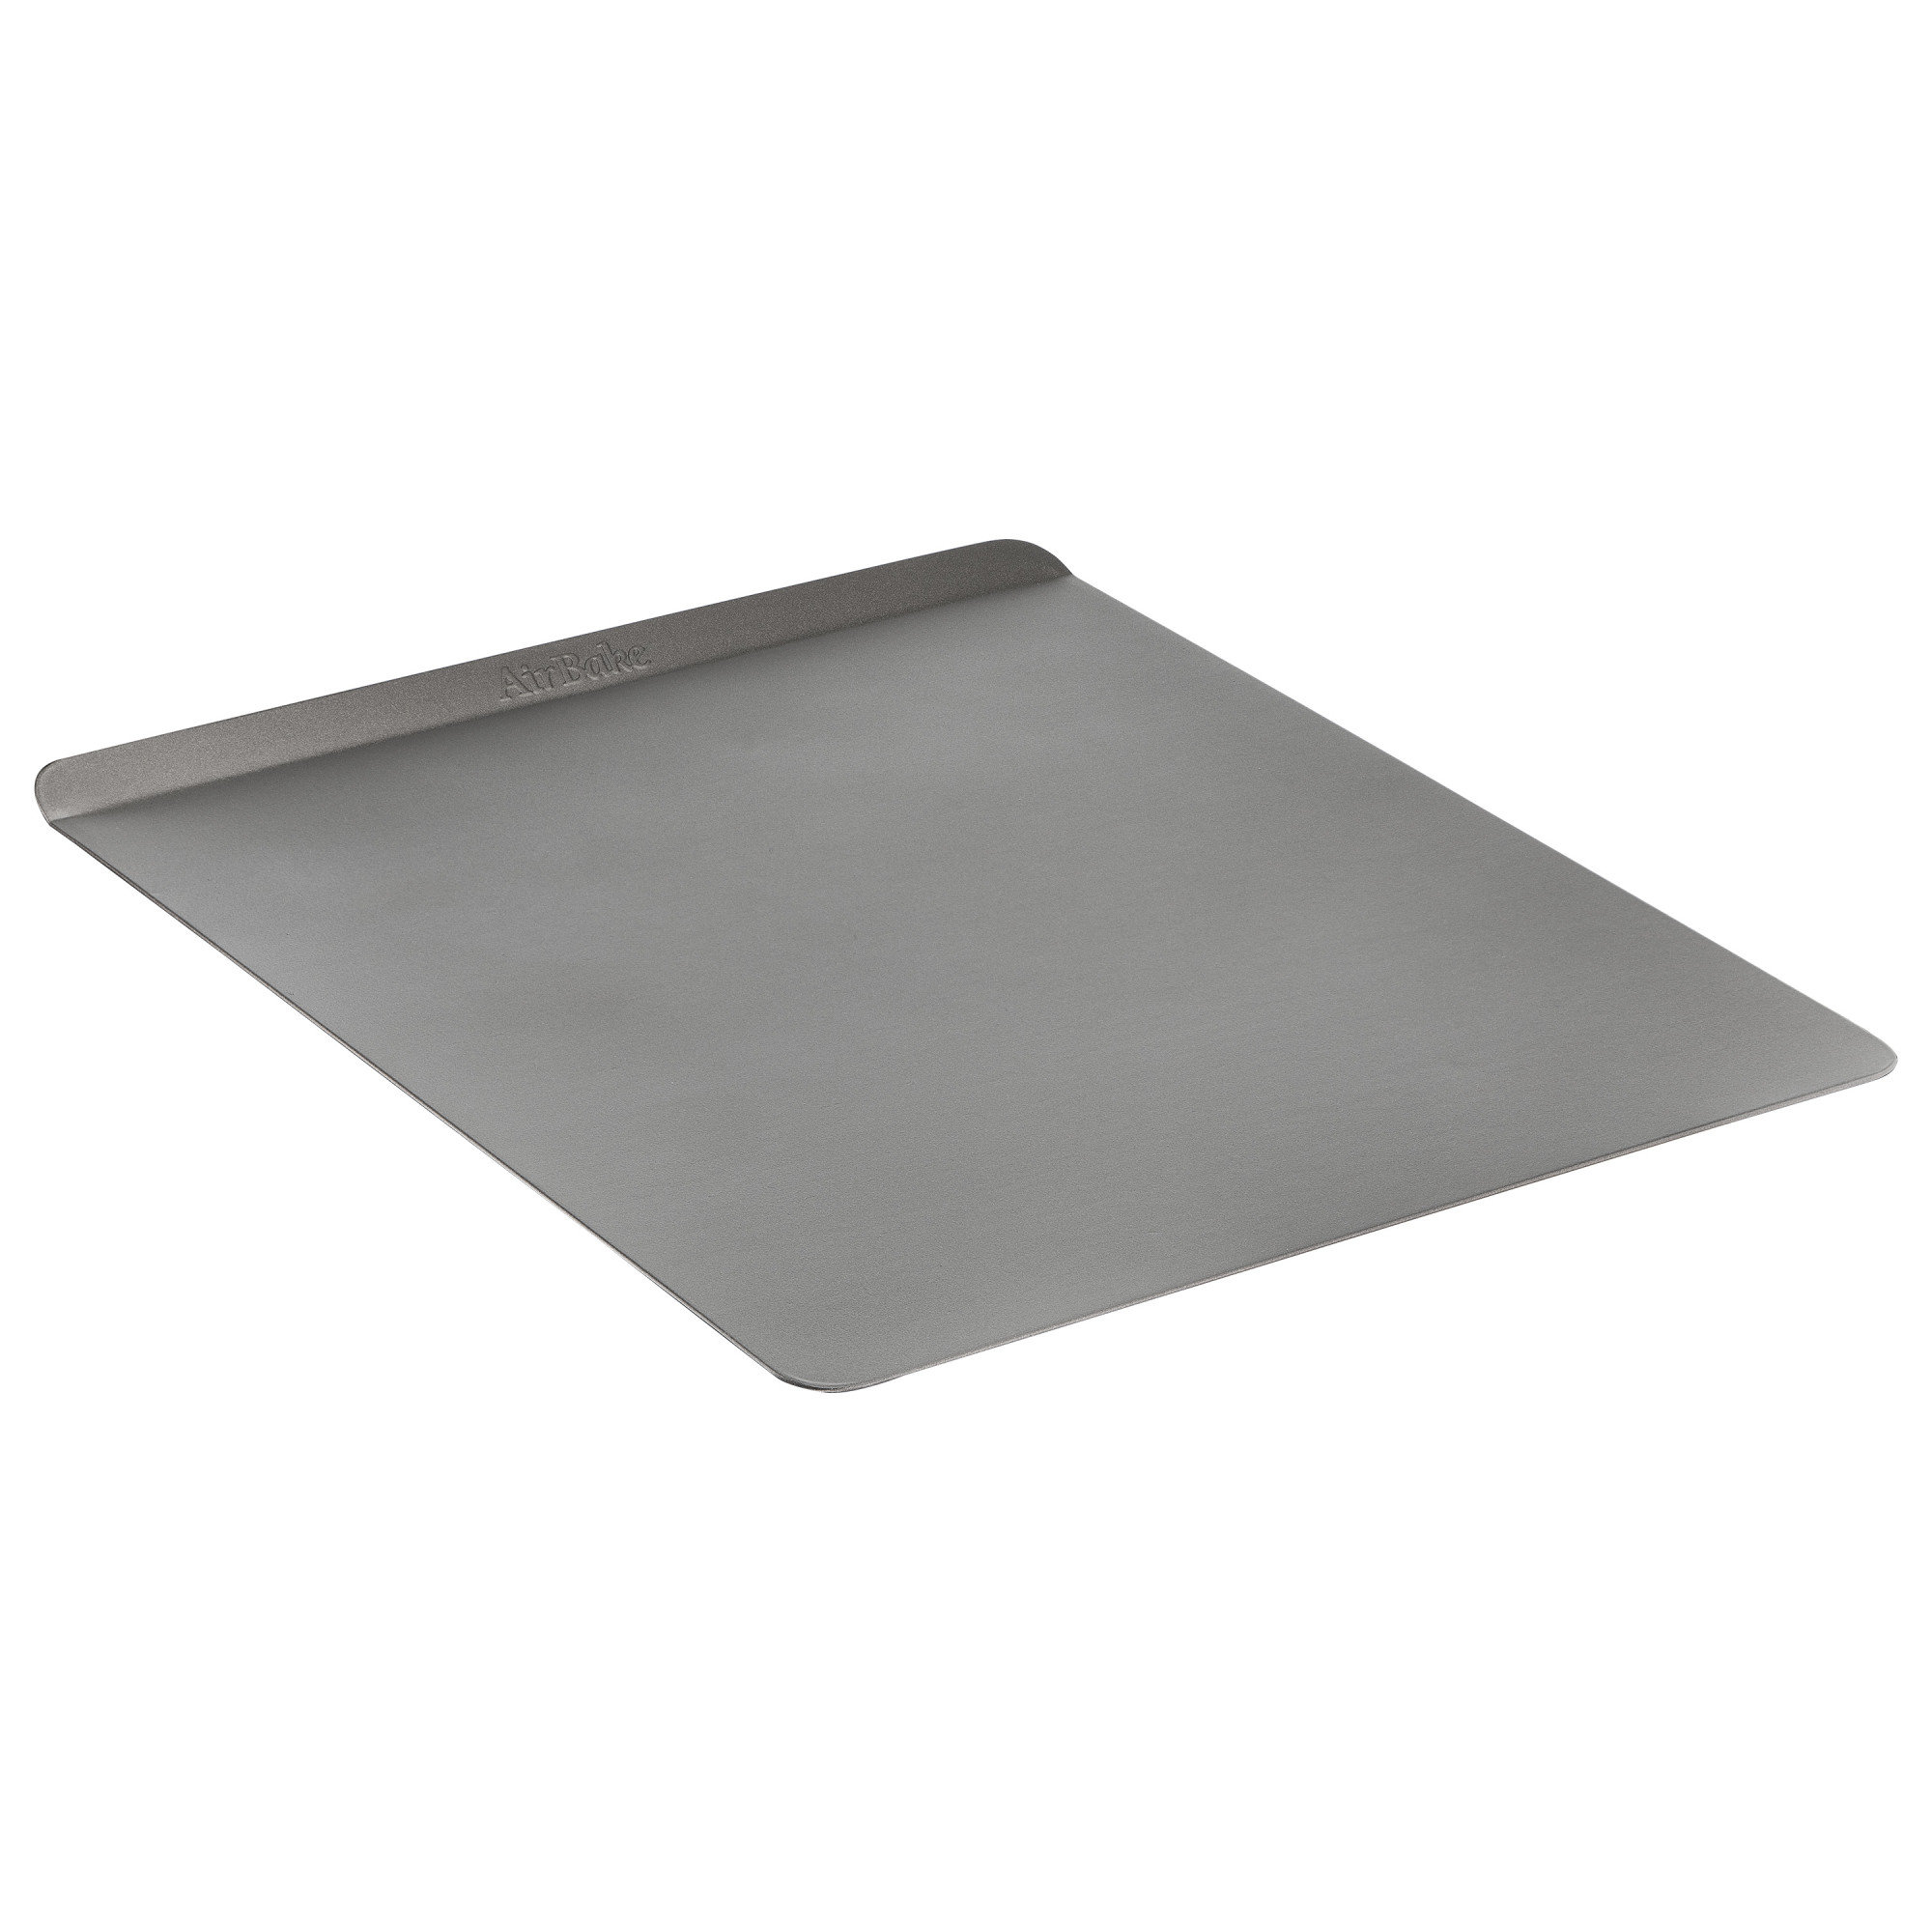  T-fal AirBake Natural Aluminum Cookie Sheet, 14 x 16, Silver: Baking  Sheet Sets: Home & Kitchen